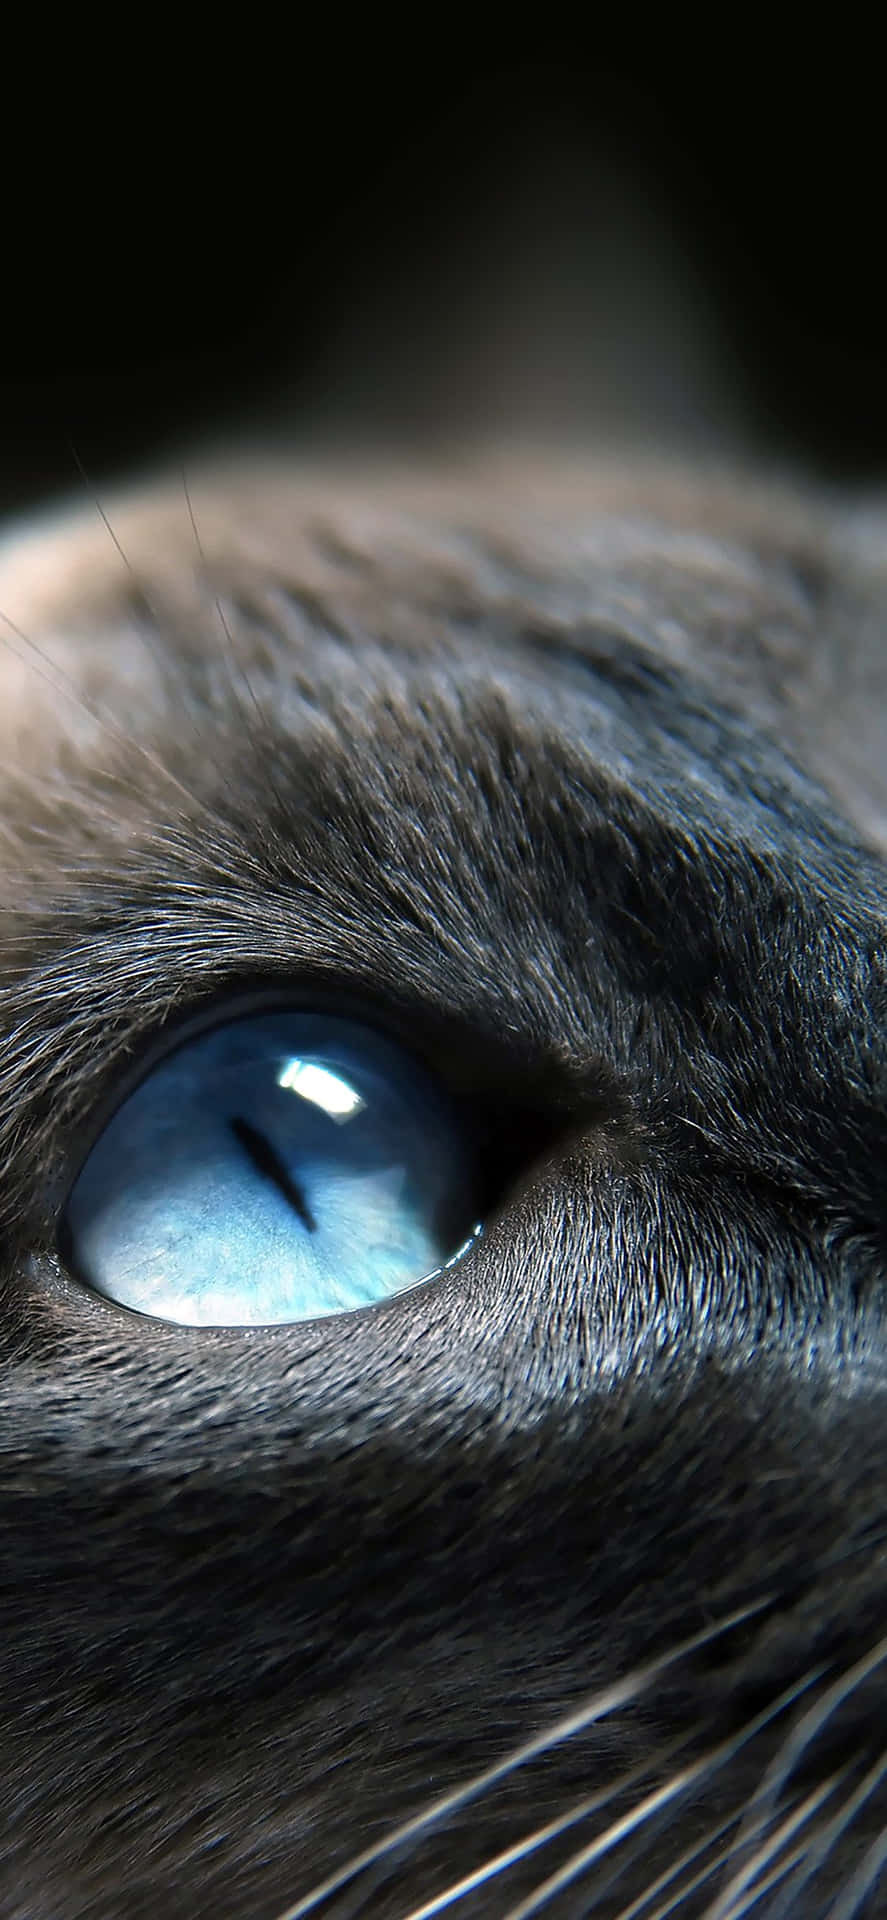 Sky Blue Cat Eyes Closed Up